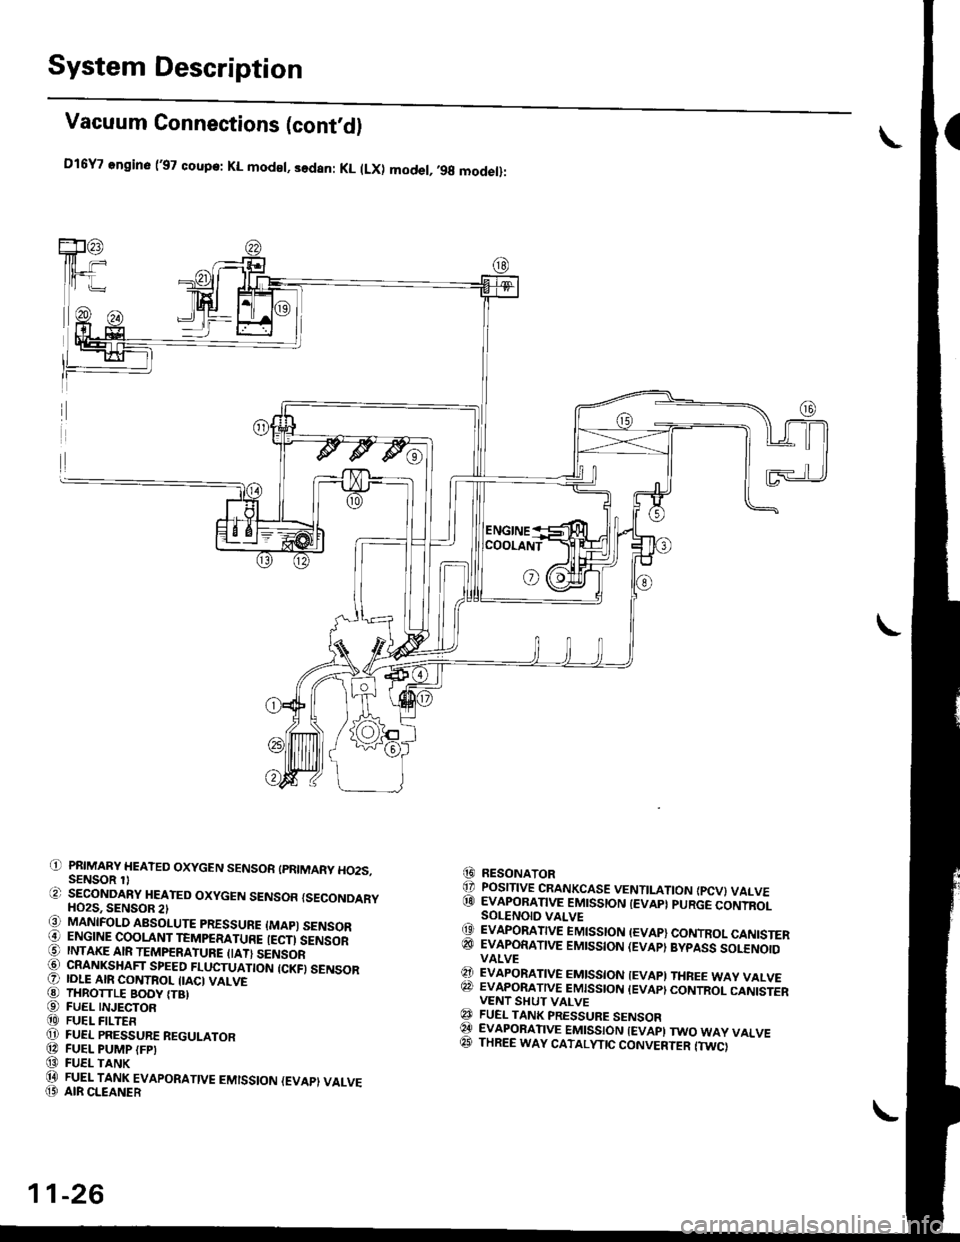 HONDA CIVIC 1996 6.G User Guide System Description
Vacuum Connections (contd)
Dl6Y7 angin6 (97 coup.: KL mod€l, sedan: KL (LX) model,,9g modet):
i1] PRIMARY HEATED OXYGEN SENSOR (PRIMARY HO2S,SENSOR 1)E) SECONDARY HEATED OXYGEN 